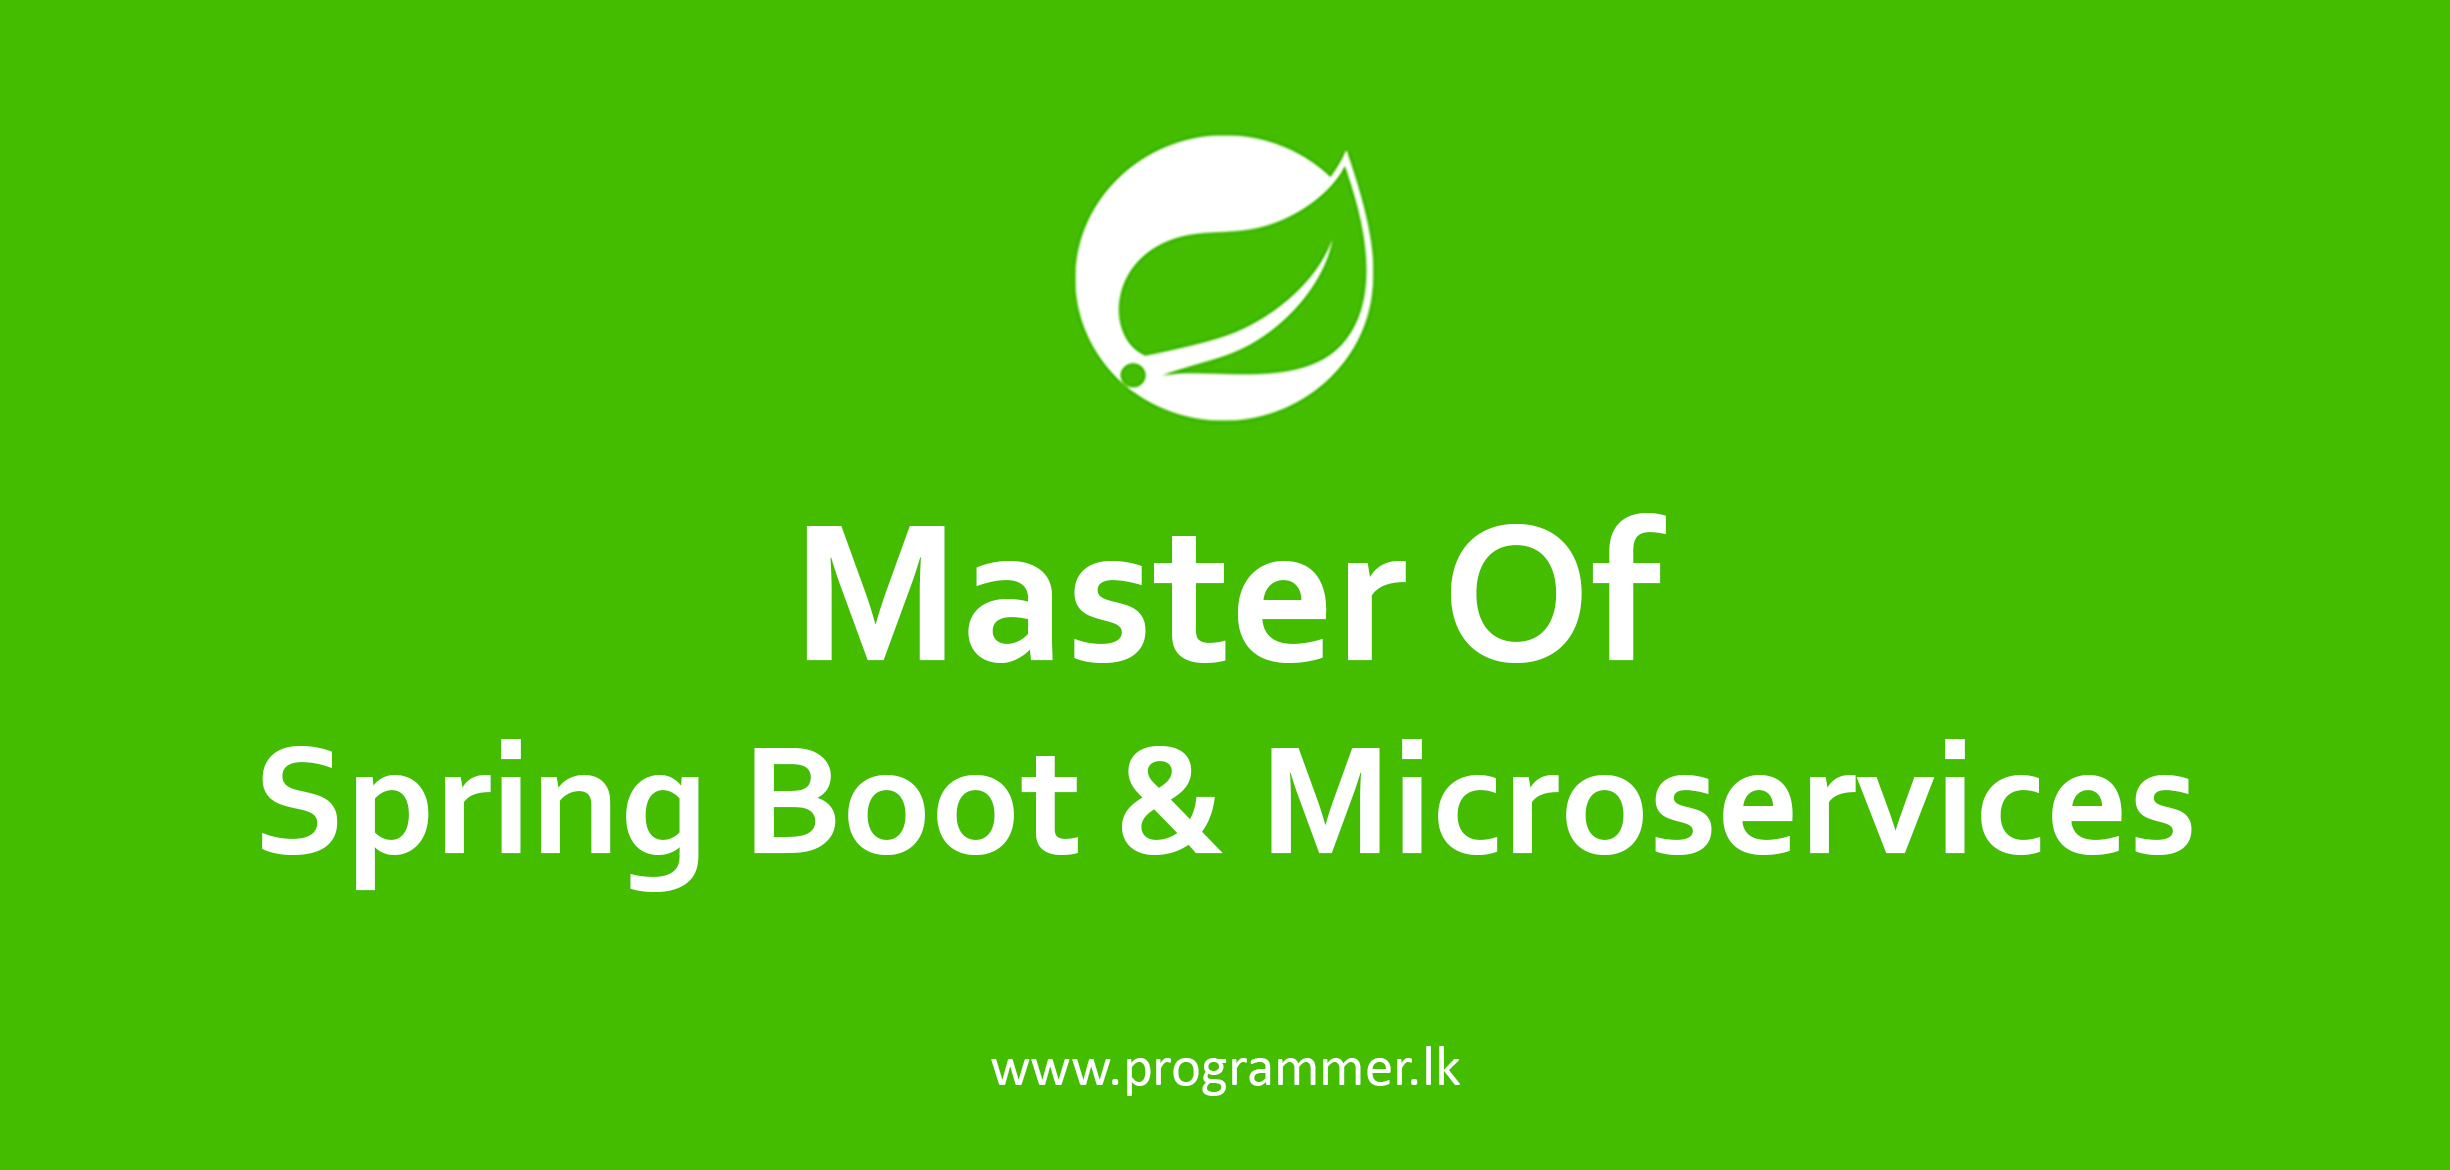 Master Of Spring Boot & Microservices in sri lanka by programmer.lk